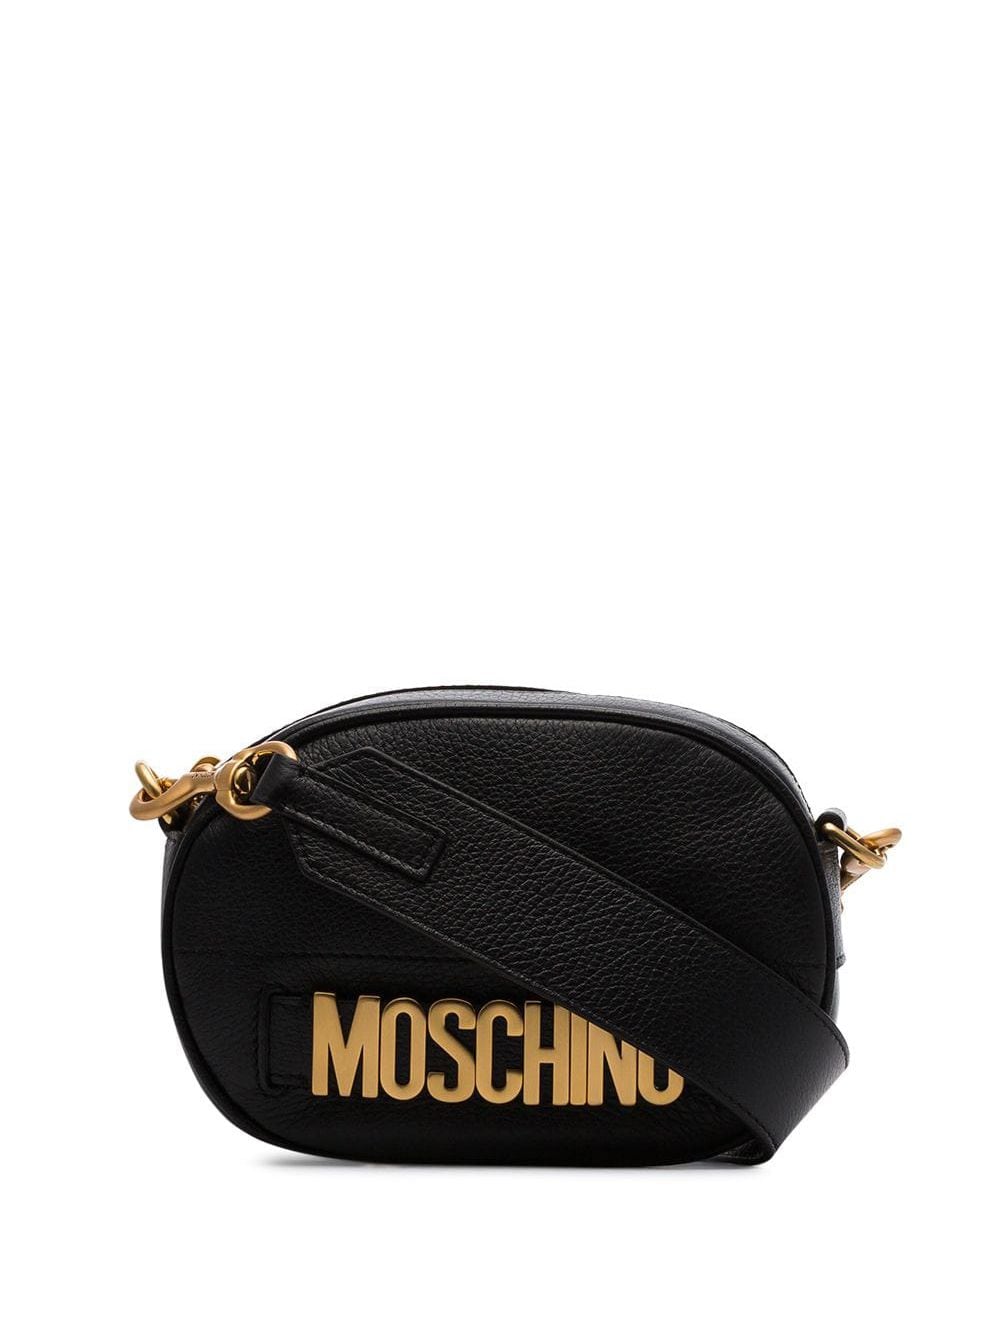 moschino leather bag